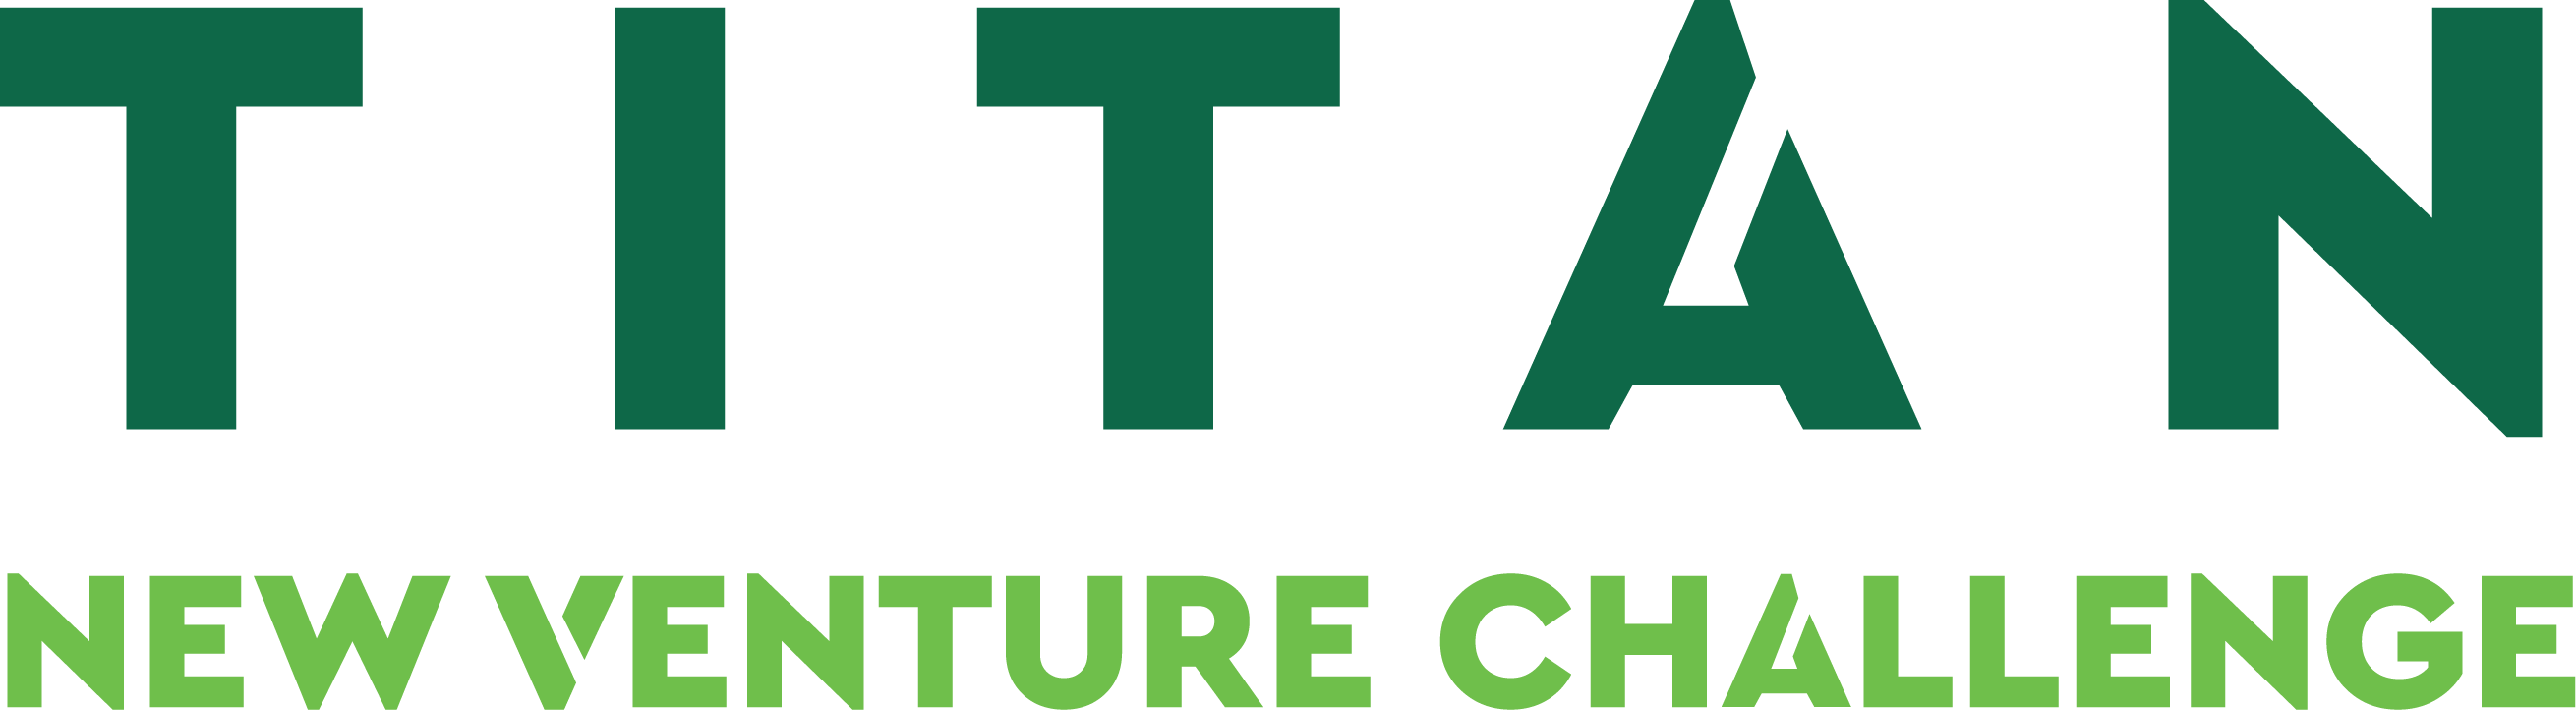 Titan New Venture Challenge logo